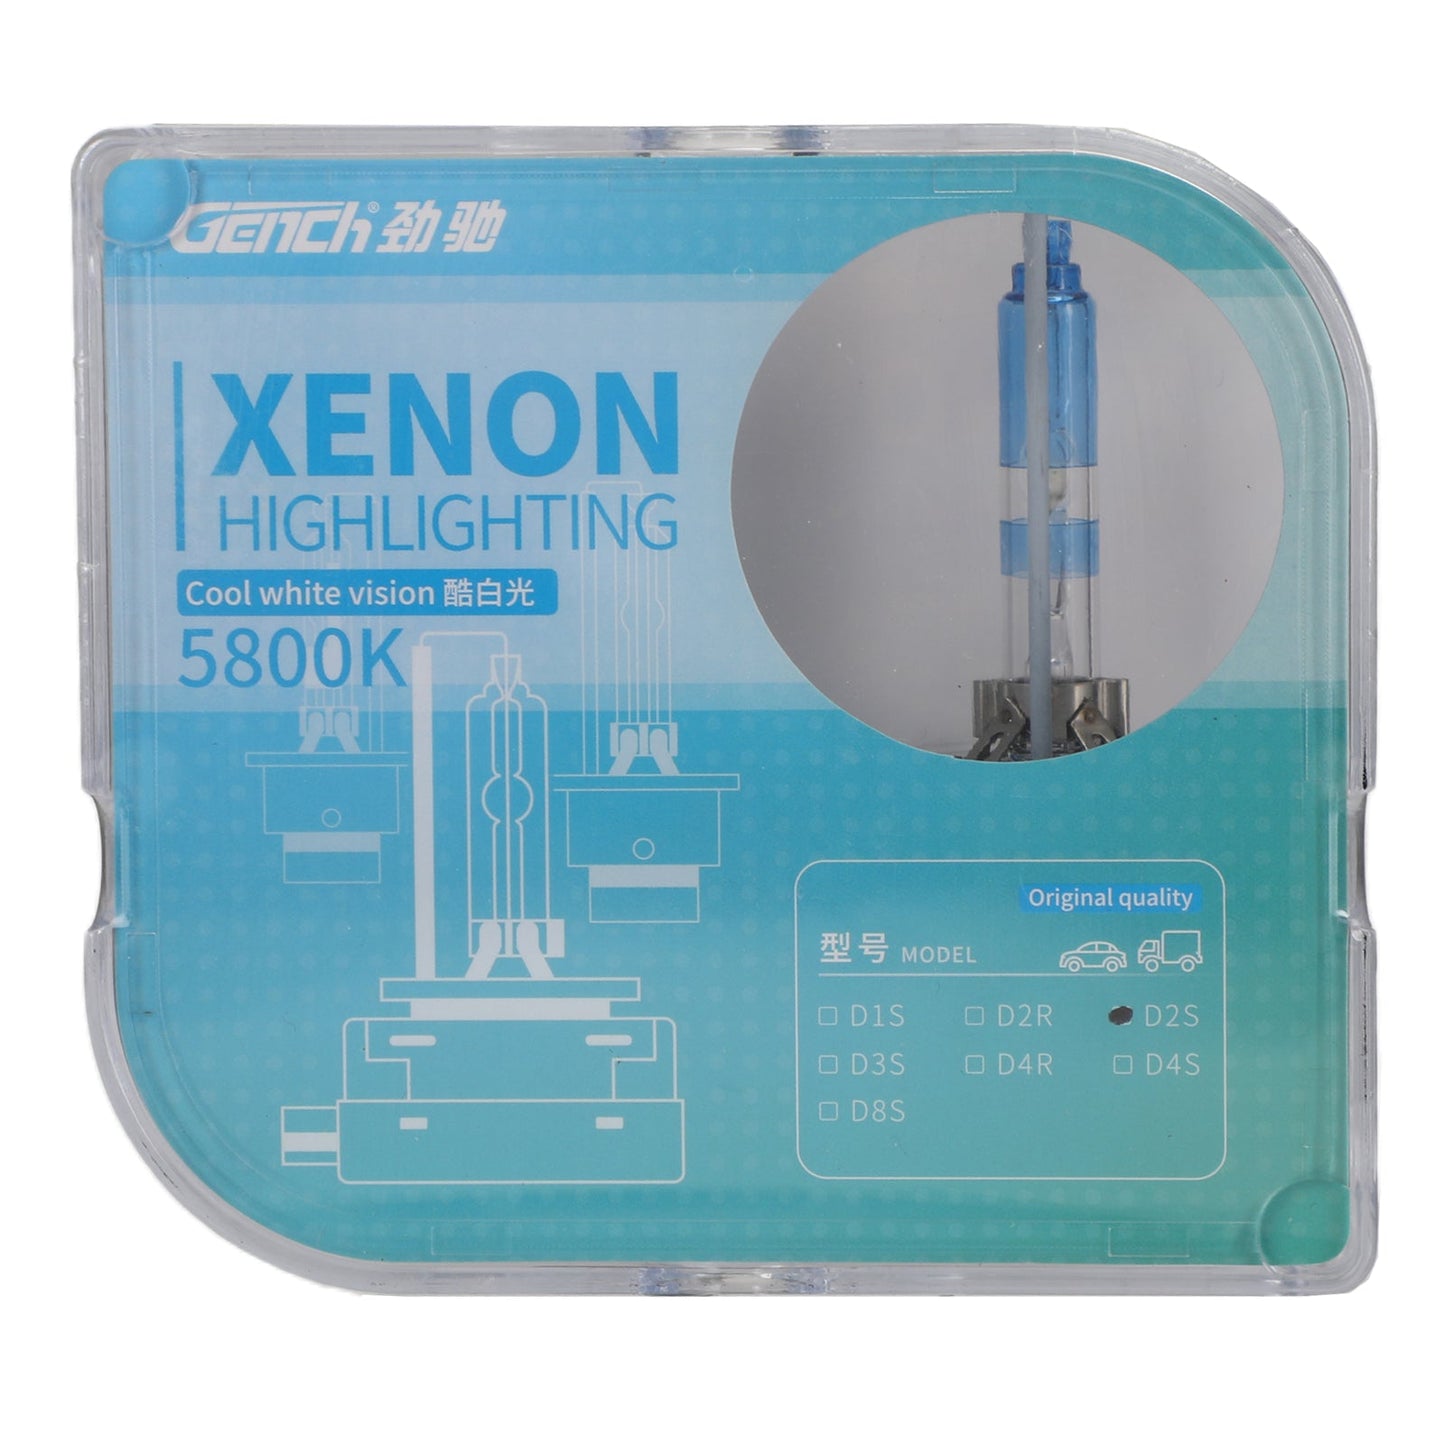 For Gench Xenon Highlighting Headlight Cool White Vision D1SCWV 5800K